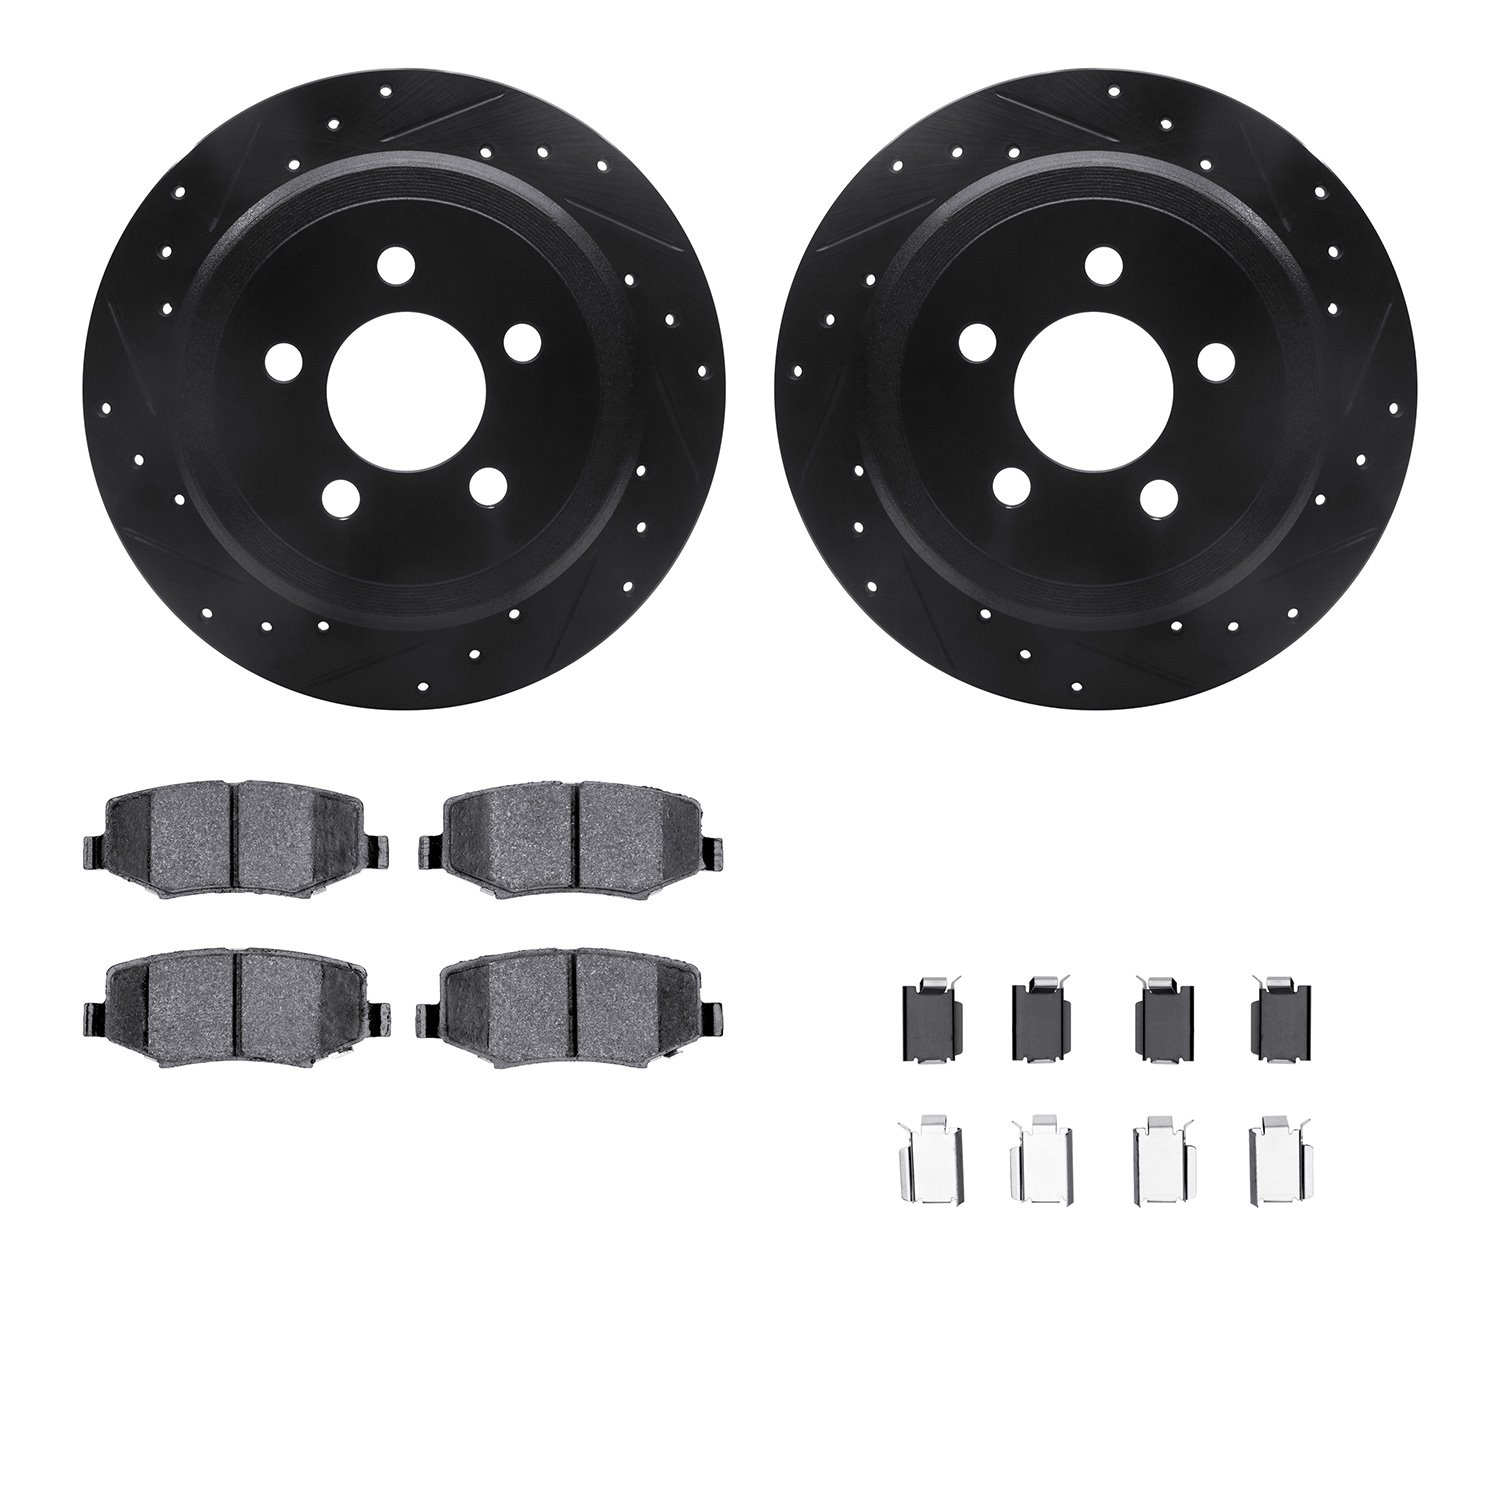 8412-42026 Drilled/Slotted Brake Rotors with Ultimate-Duty Brake Pads Kit & Hardware [Black], 2007-2012 Mopar, Position: Rear